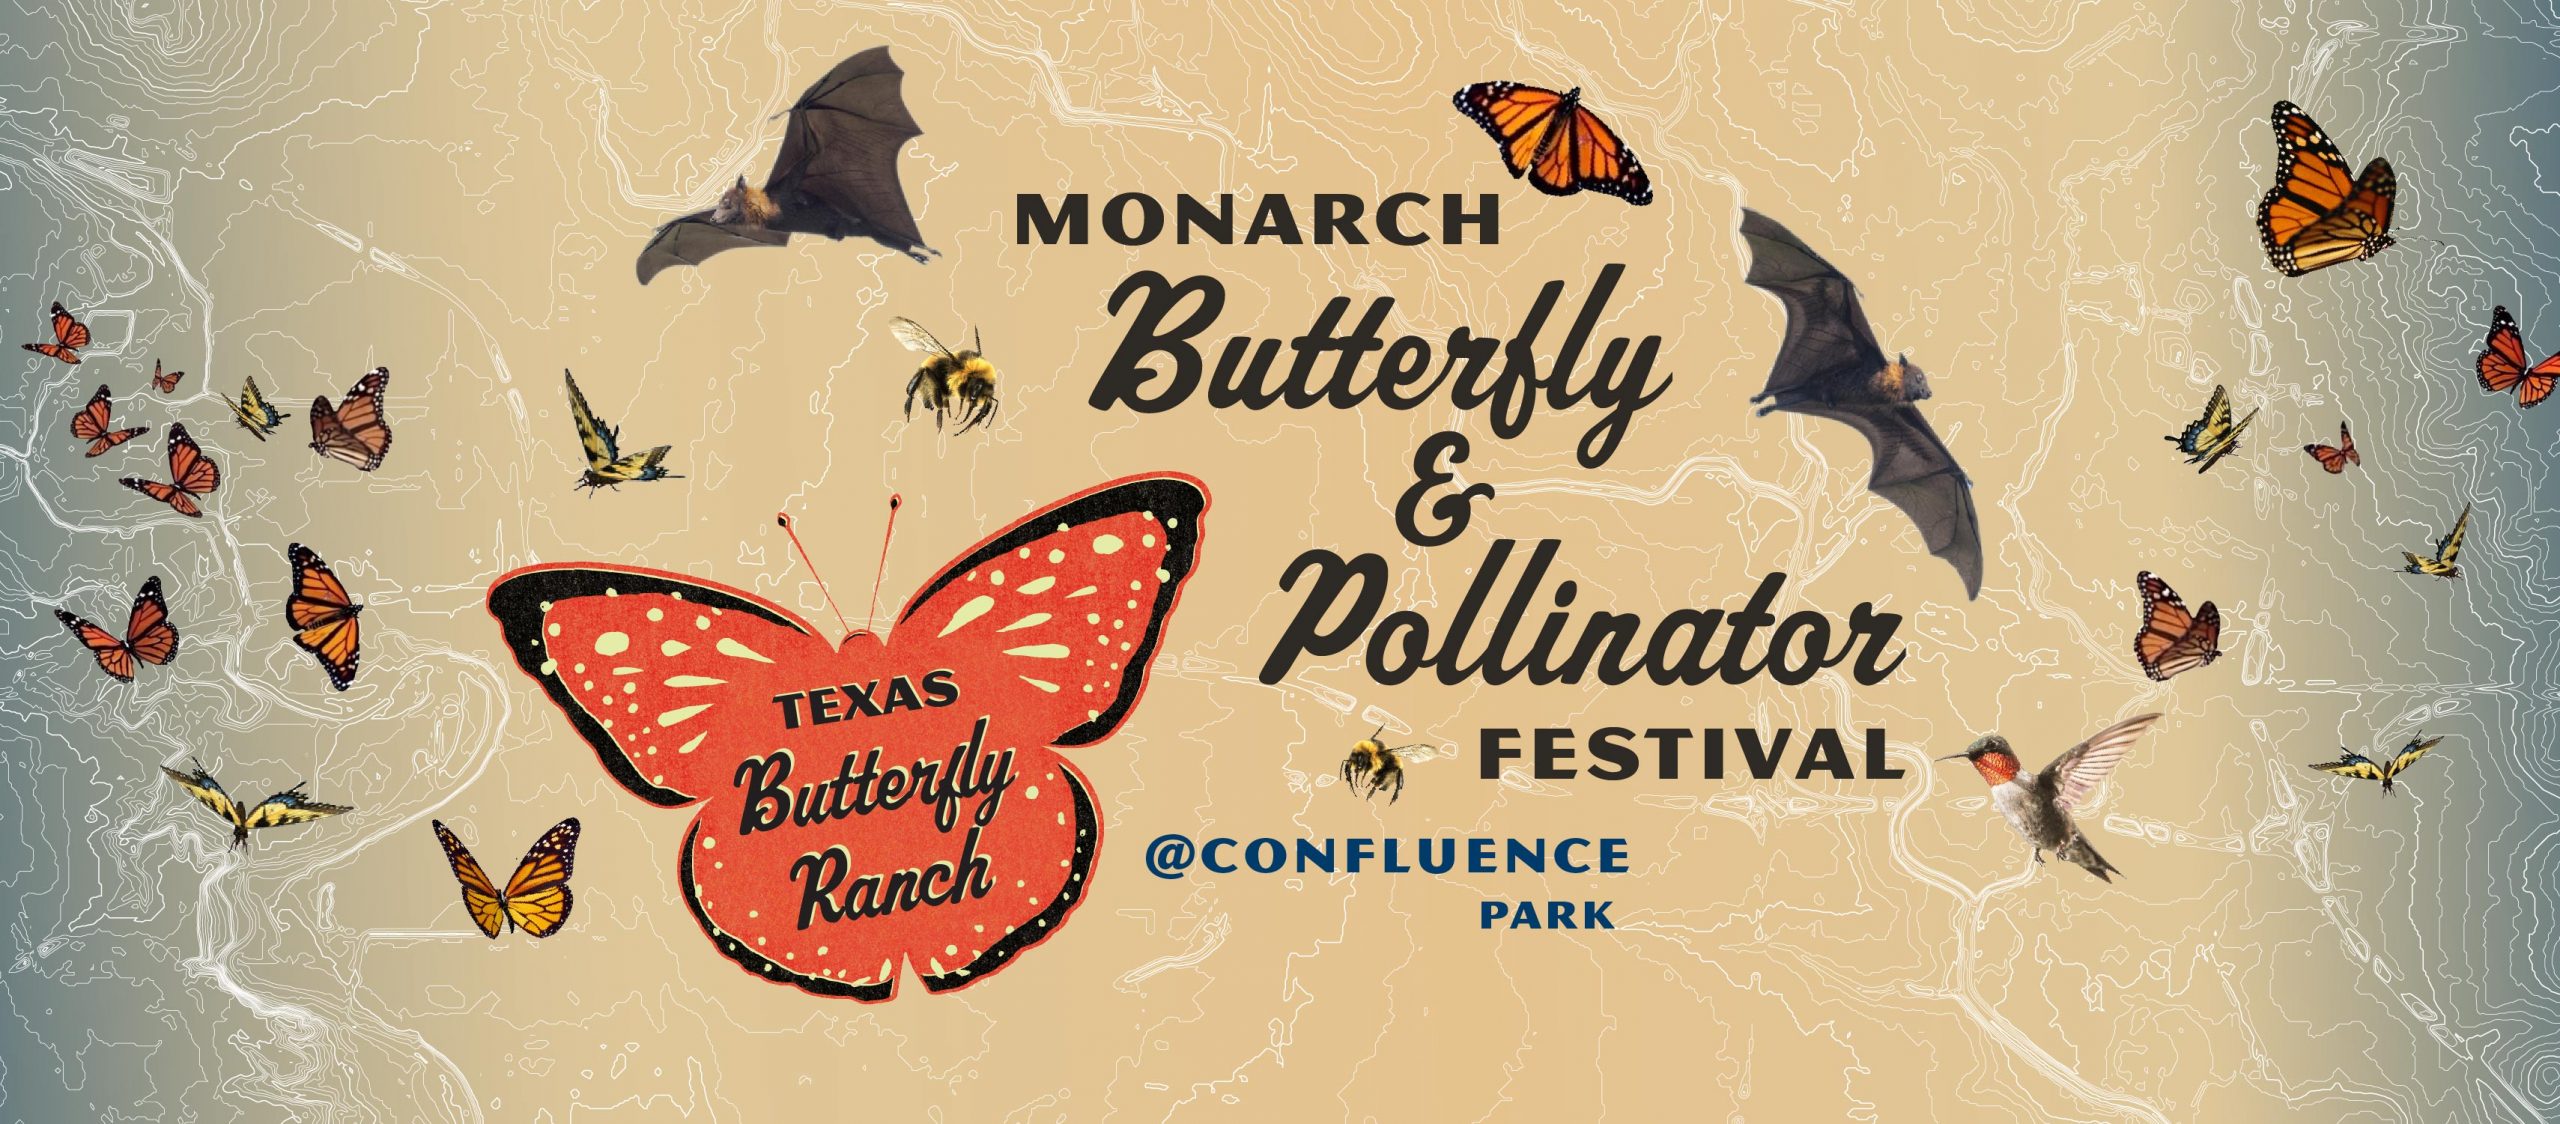 Monarch Butterfly & Pollinator Festival @CONFLUENCE PARK